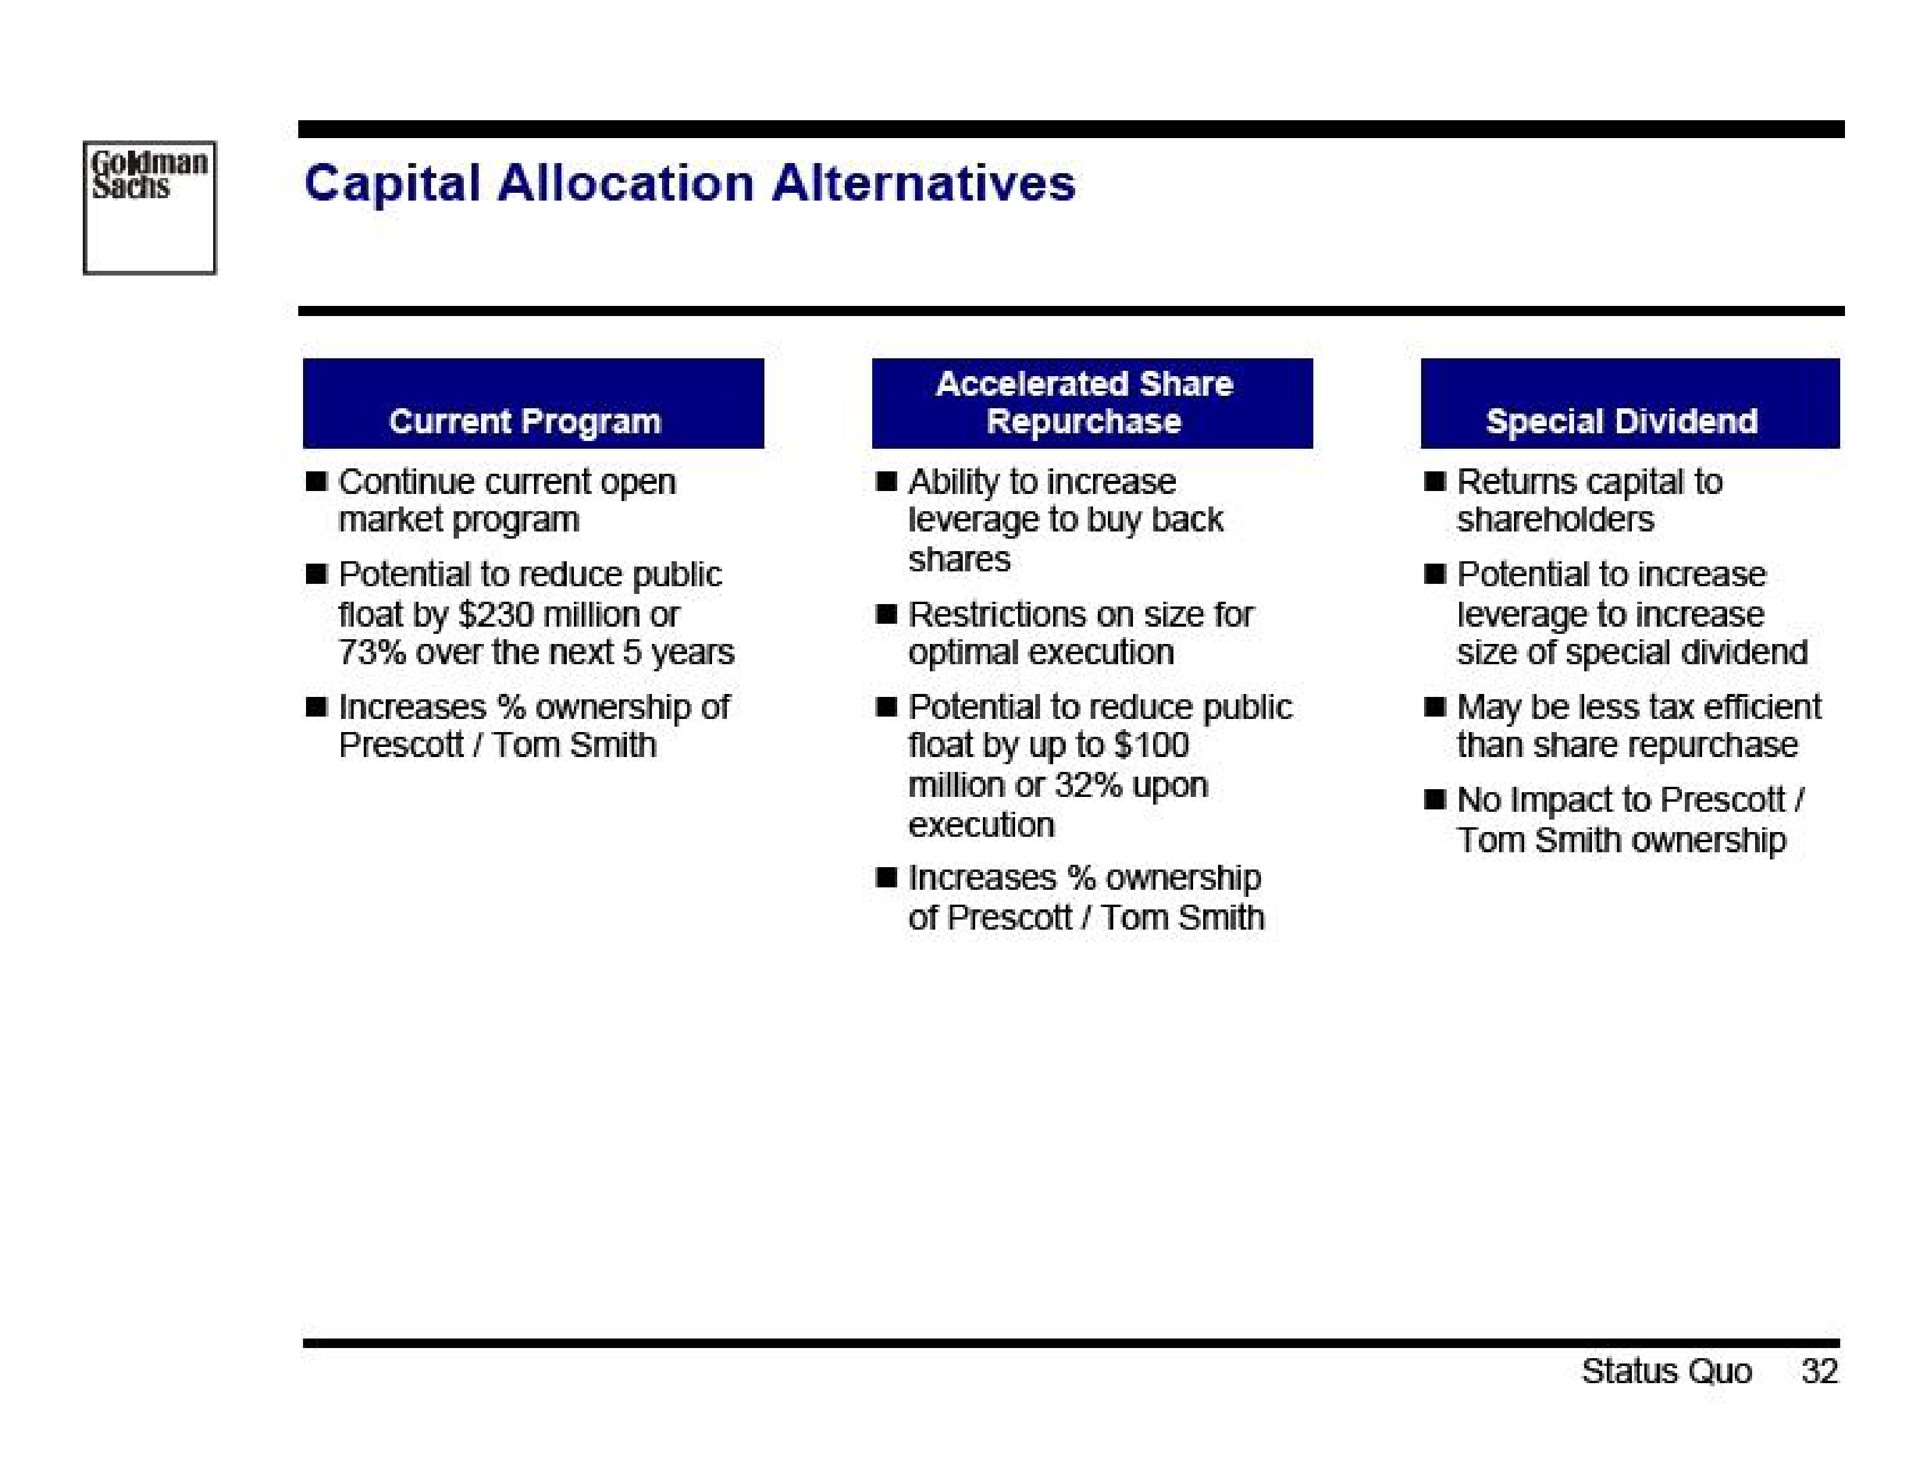 capital allocation alternatives | Goldman Sachs